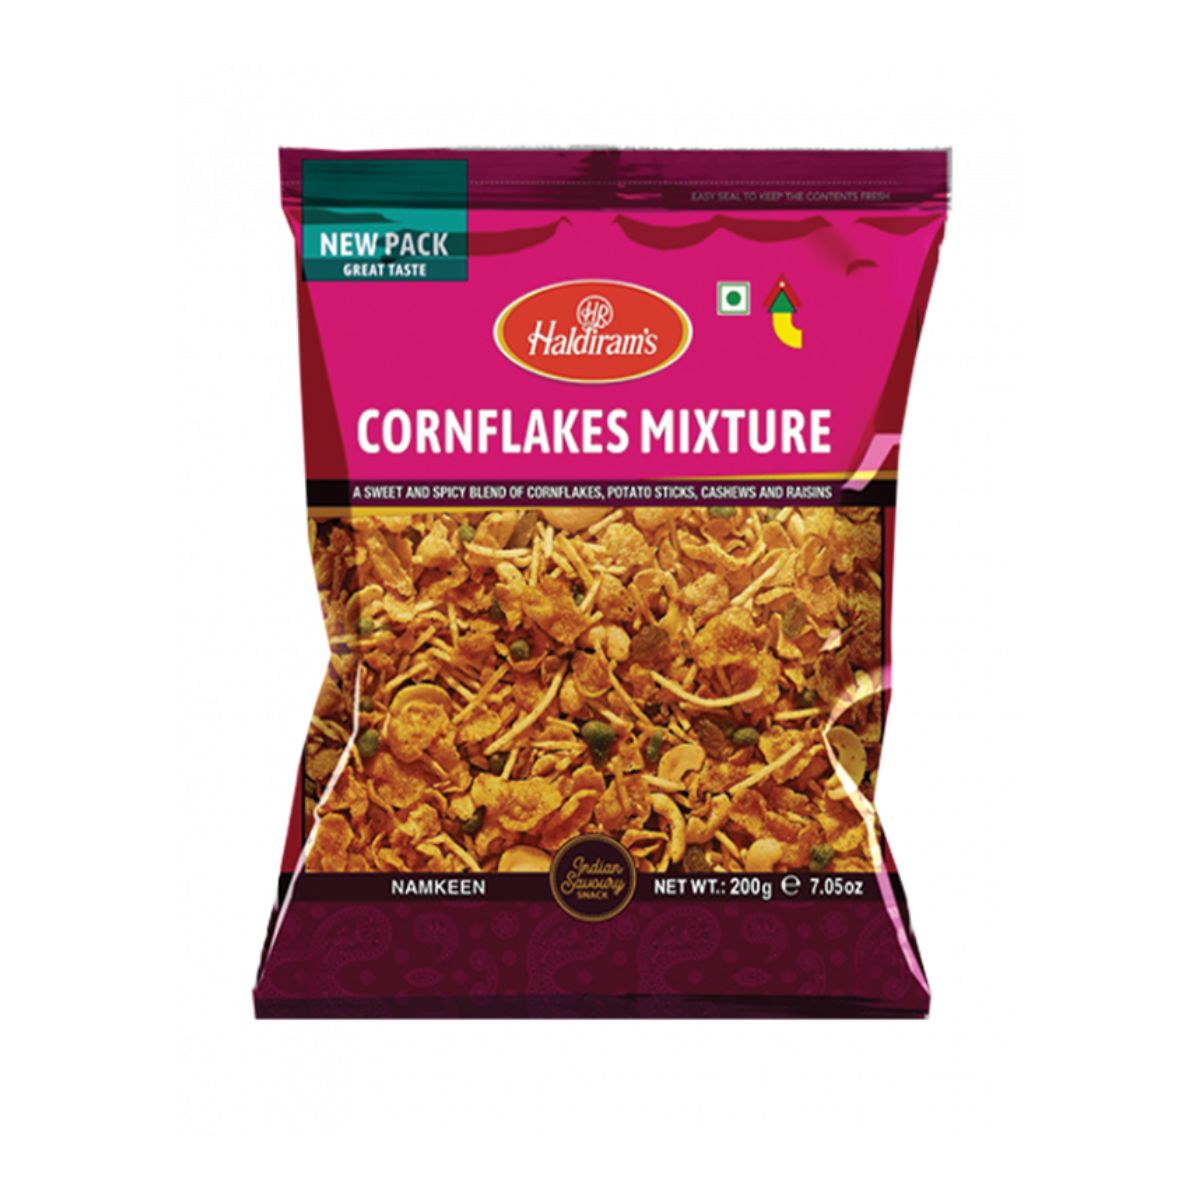 Haldiram's Cornflakes Mixture - A Sweet And Spicy Blend Of Cornflakes, Potato Sticks, Cashews And Raisins - 200g